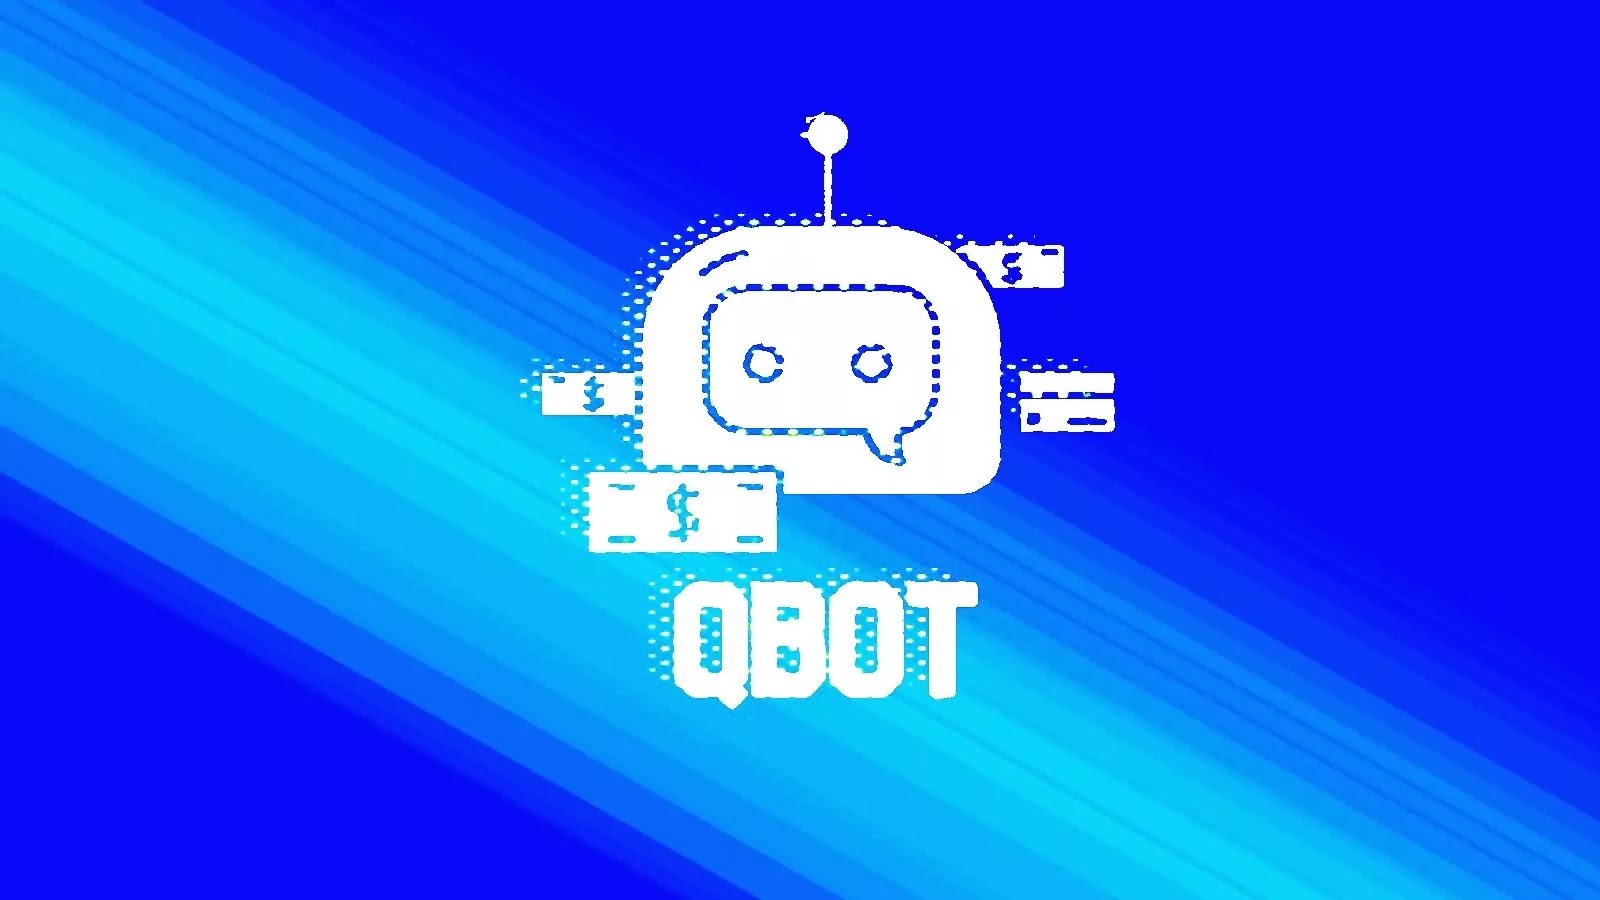 Qbot Trojan - A New Banking Trojan Campaign Targeting Businesses